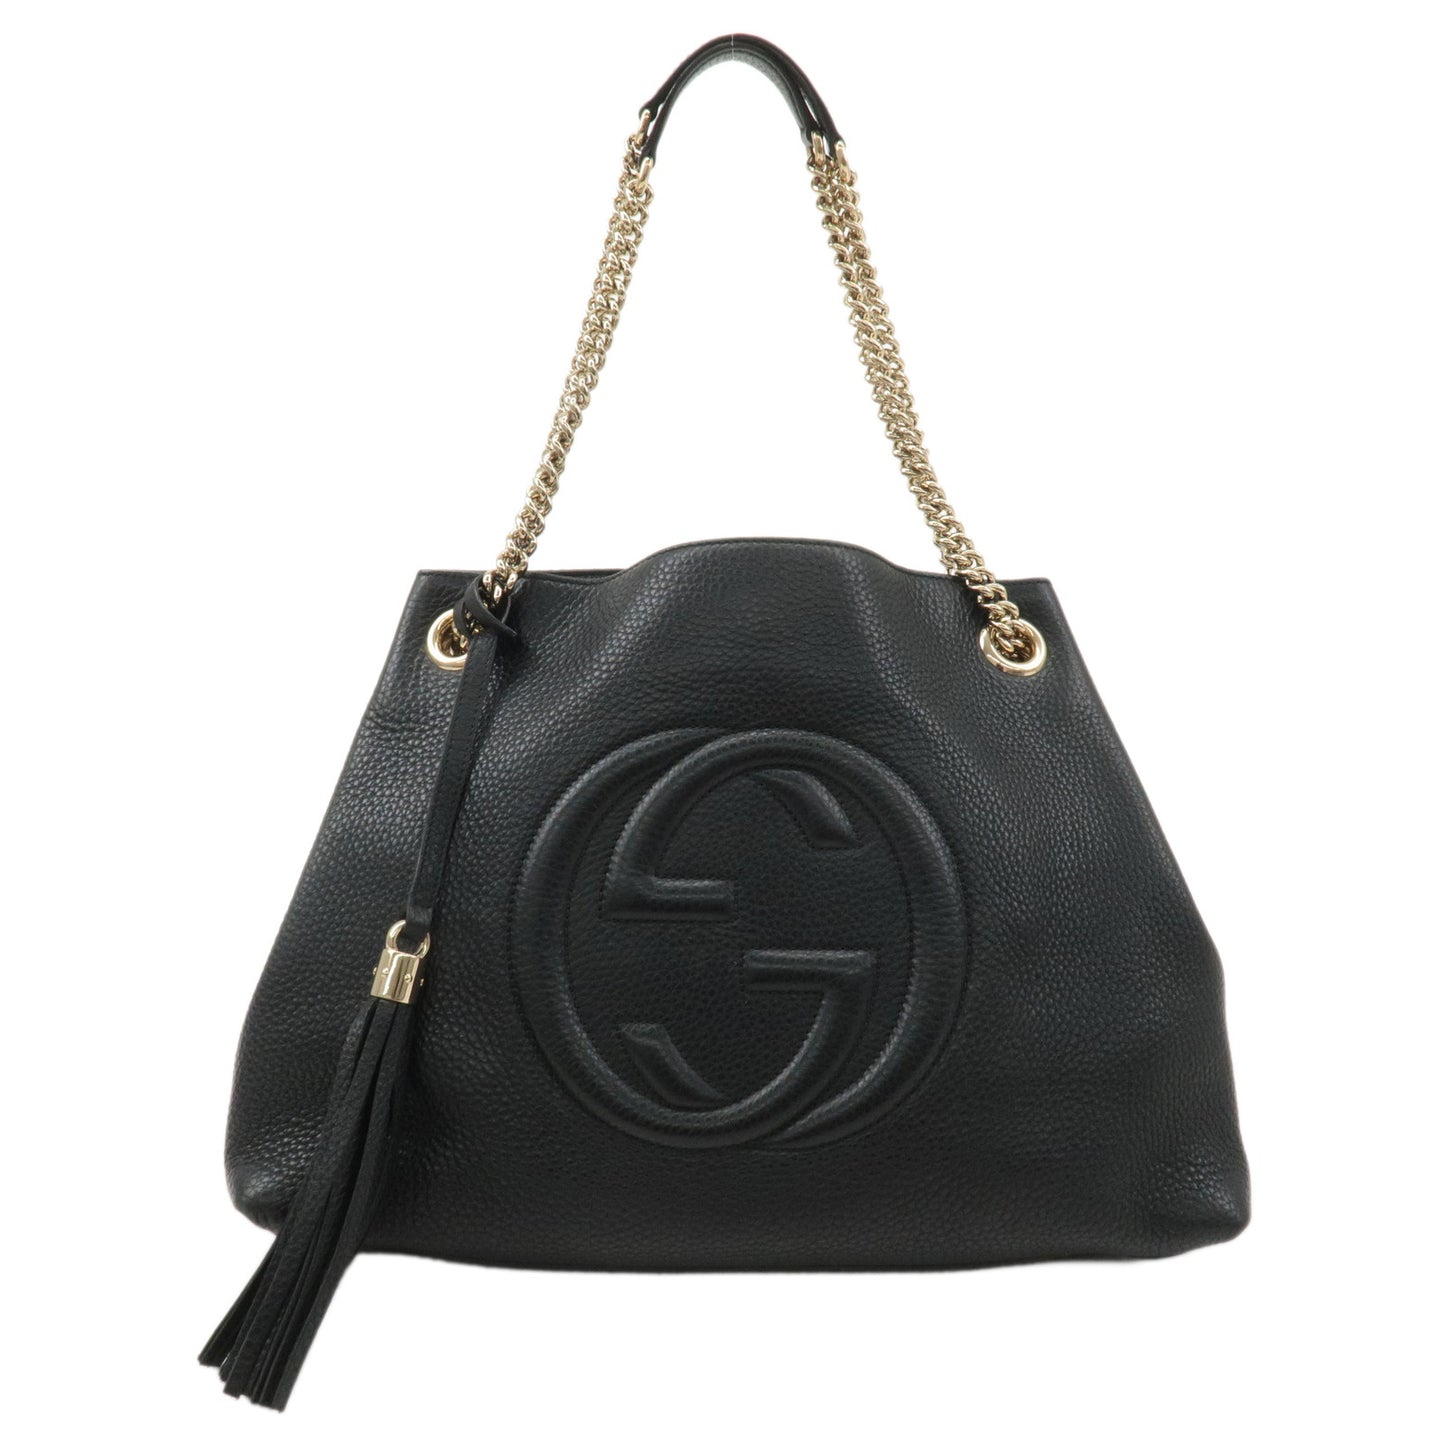 GUCCI-SOHO-Leather-Chain-Shoulder-Bag-Black-308982